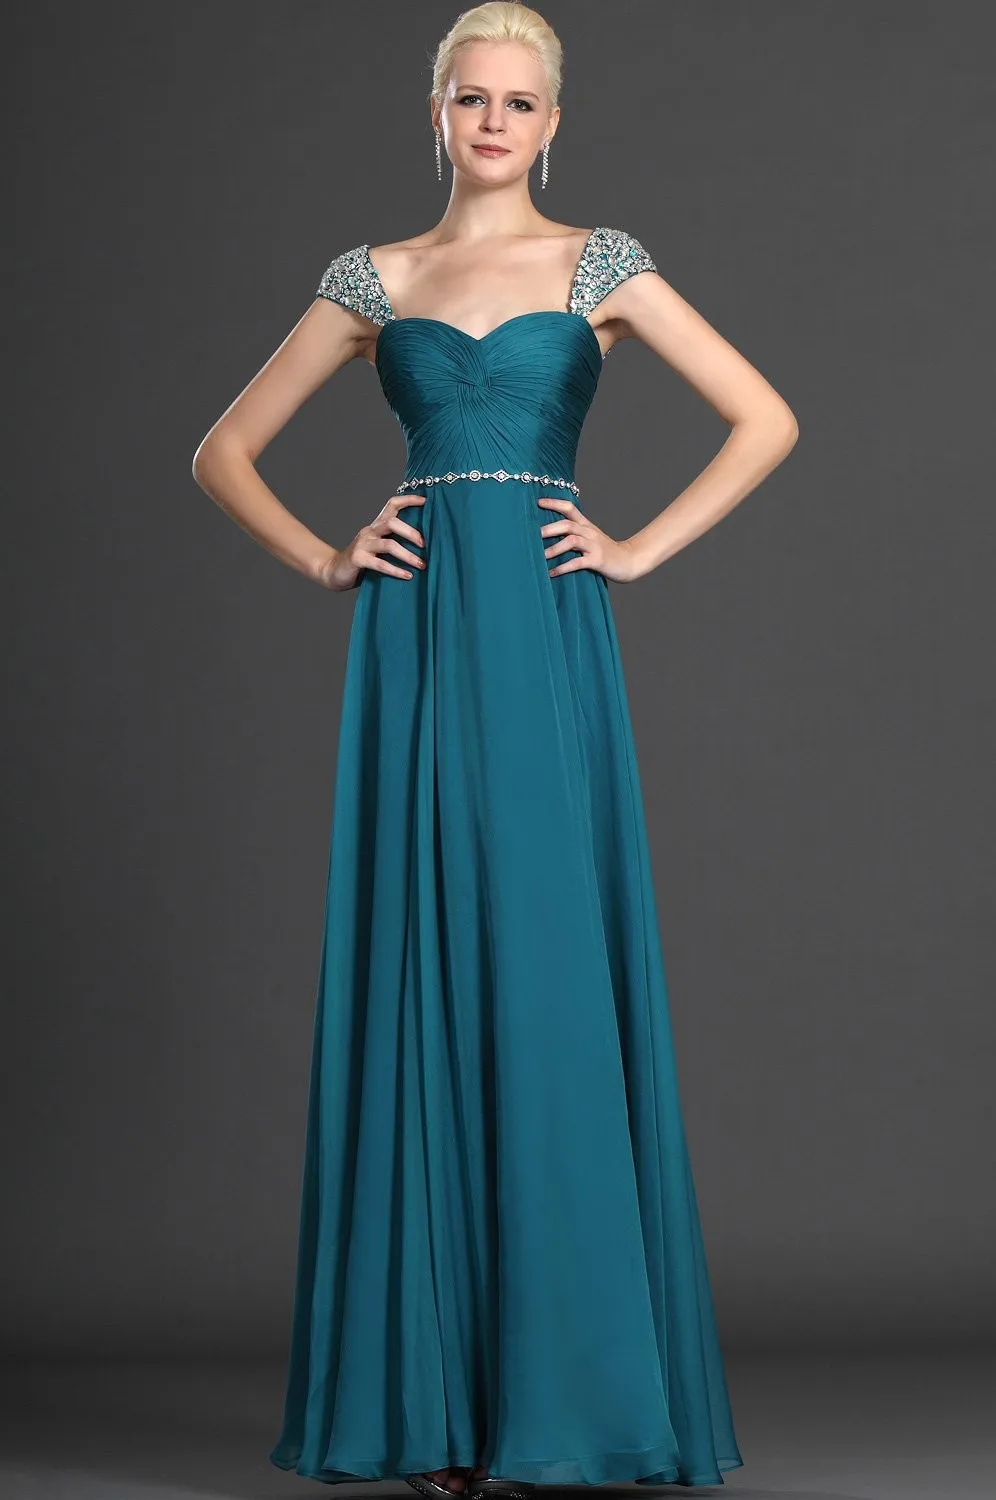 Emerald Green Cap Sleeves Open Back Evening Dress Prom Gown Modest ...